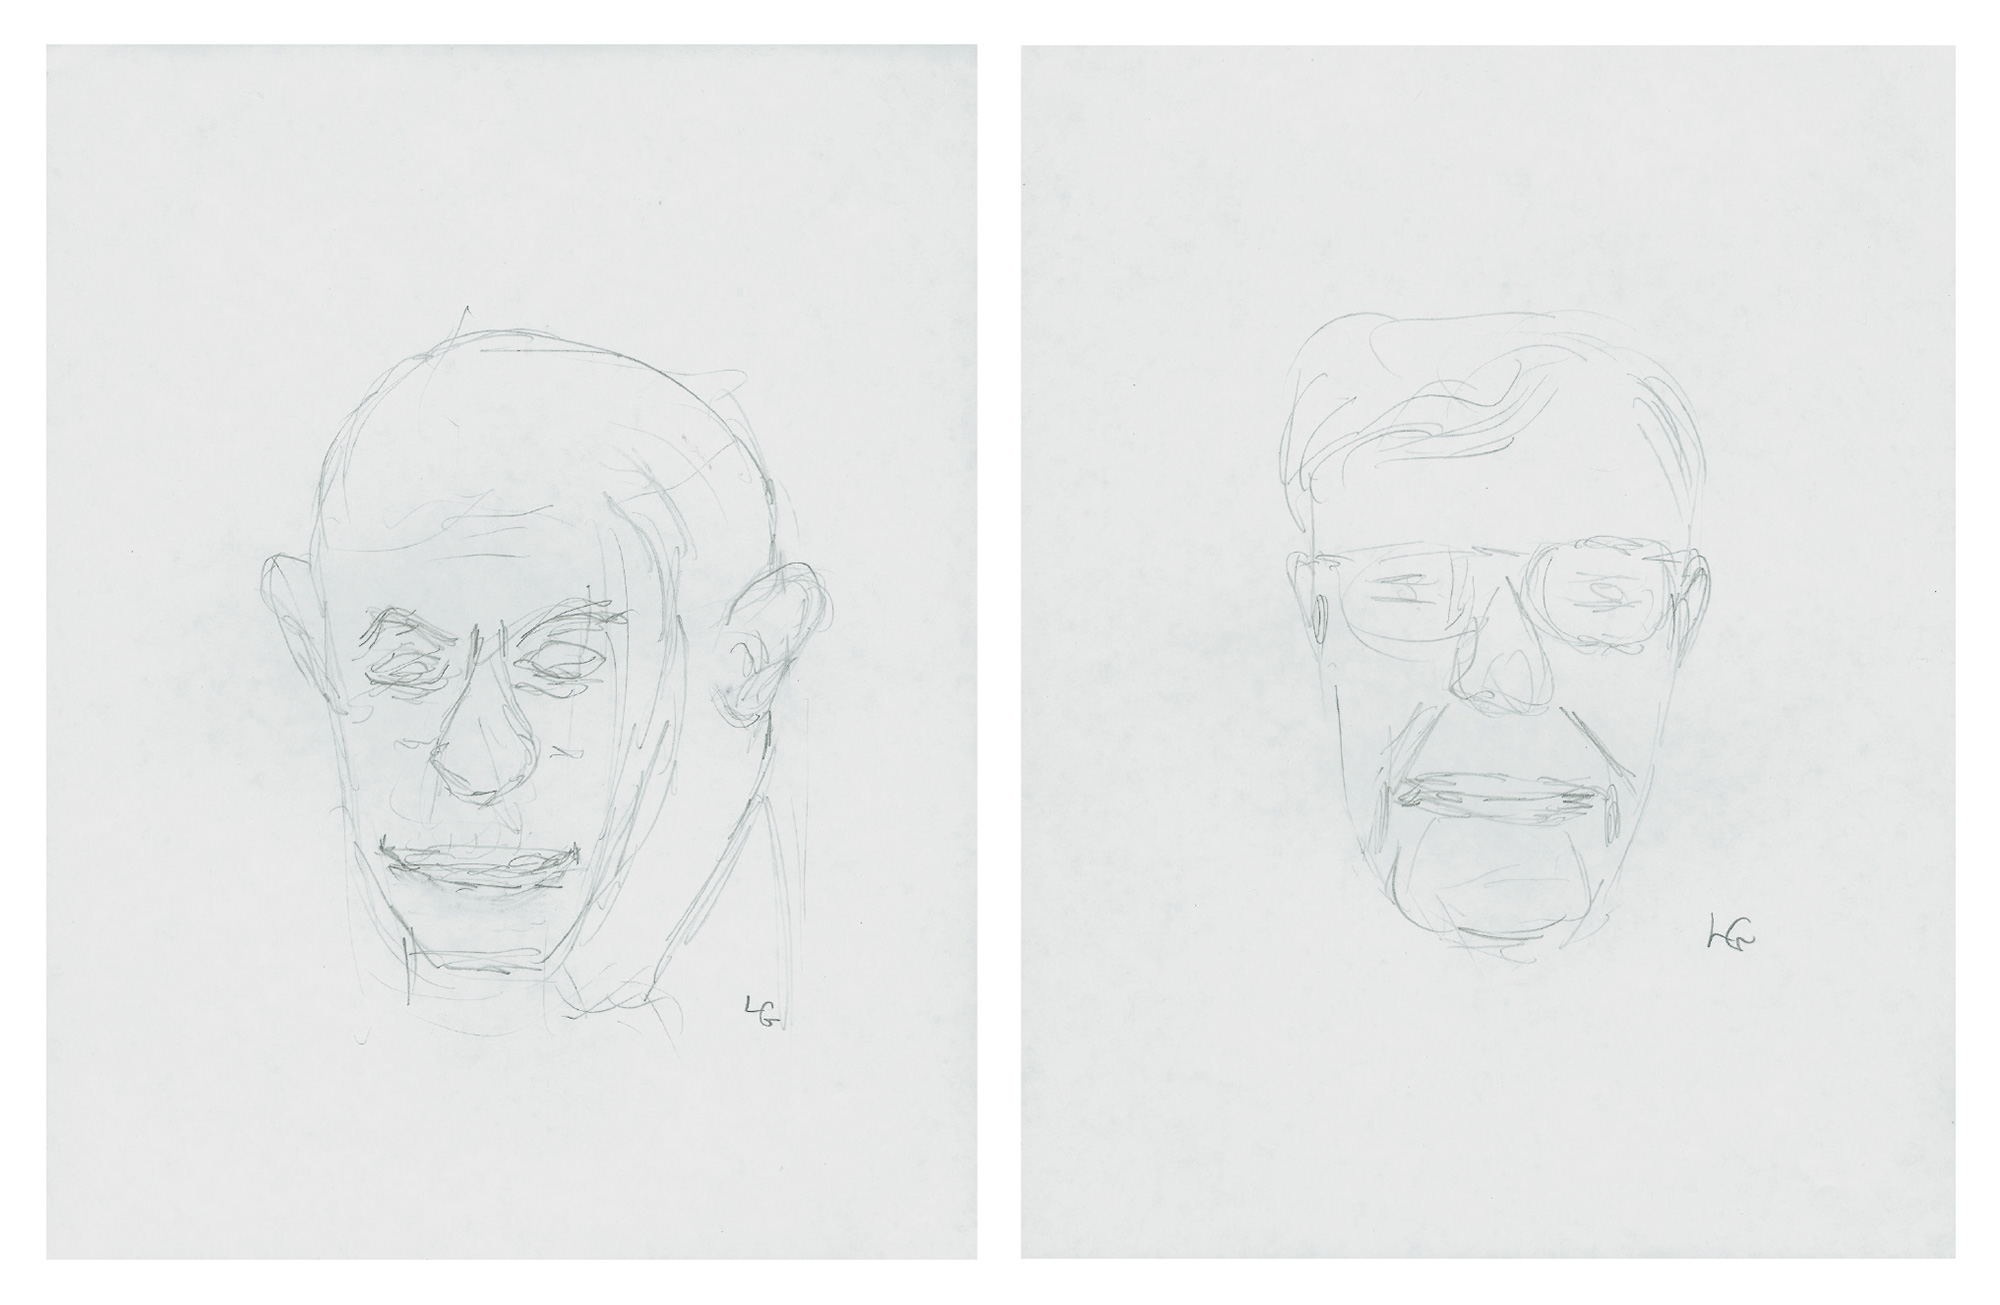 Leon Golub the artist (left) and Leon Golub the psychoanalsyt (right) as drawn by Leon Golub the scientist.